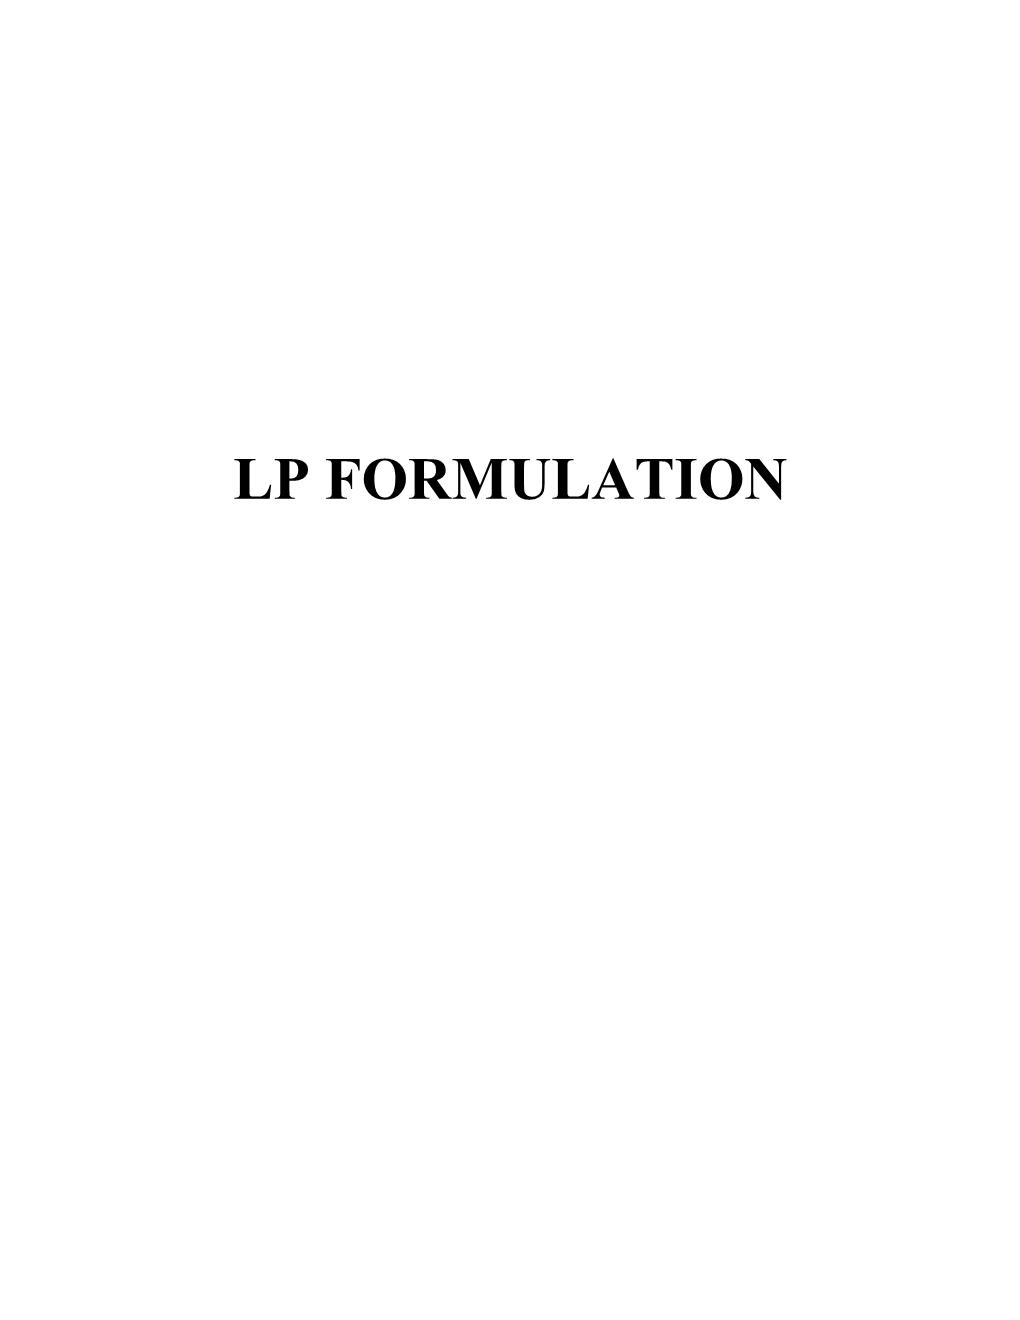 LP FORMULATION Marketing Application